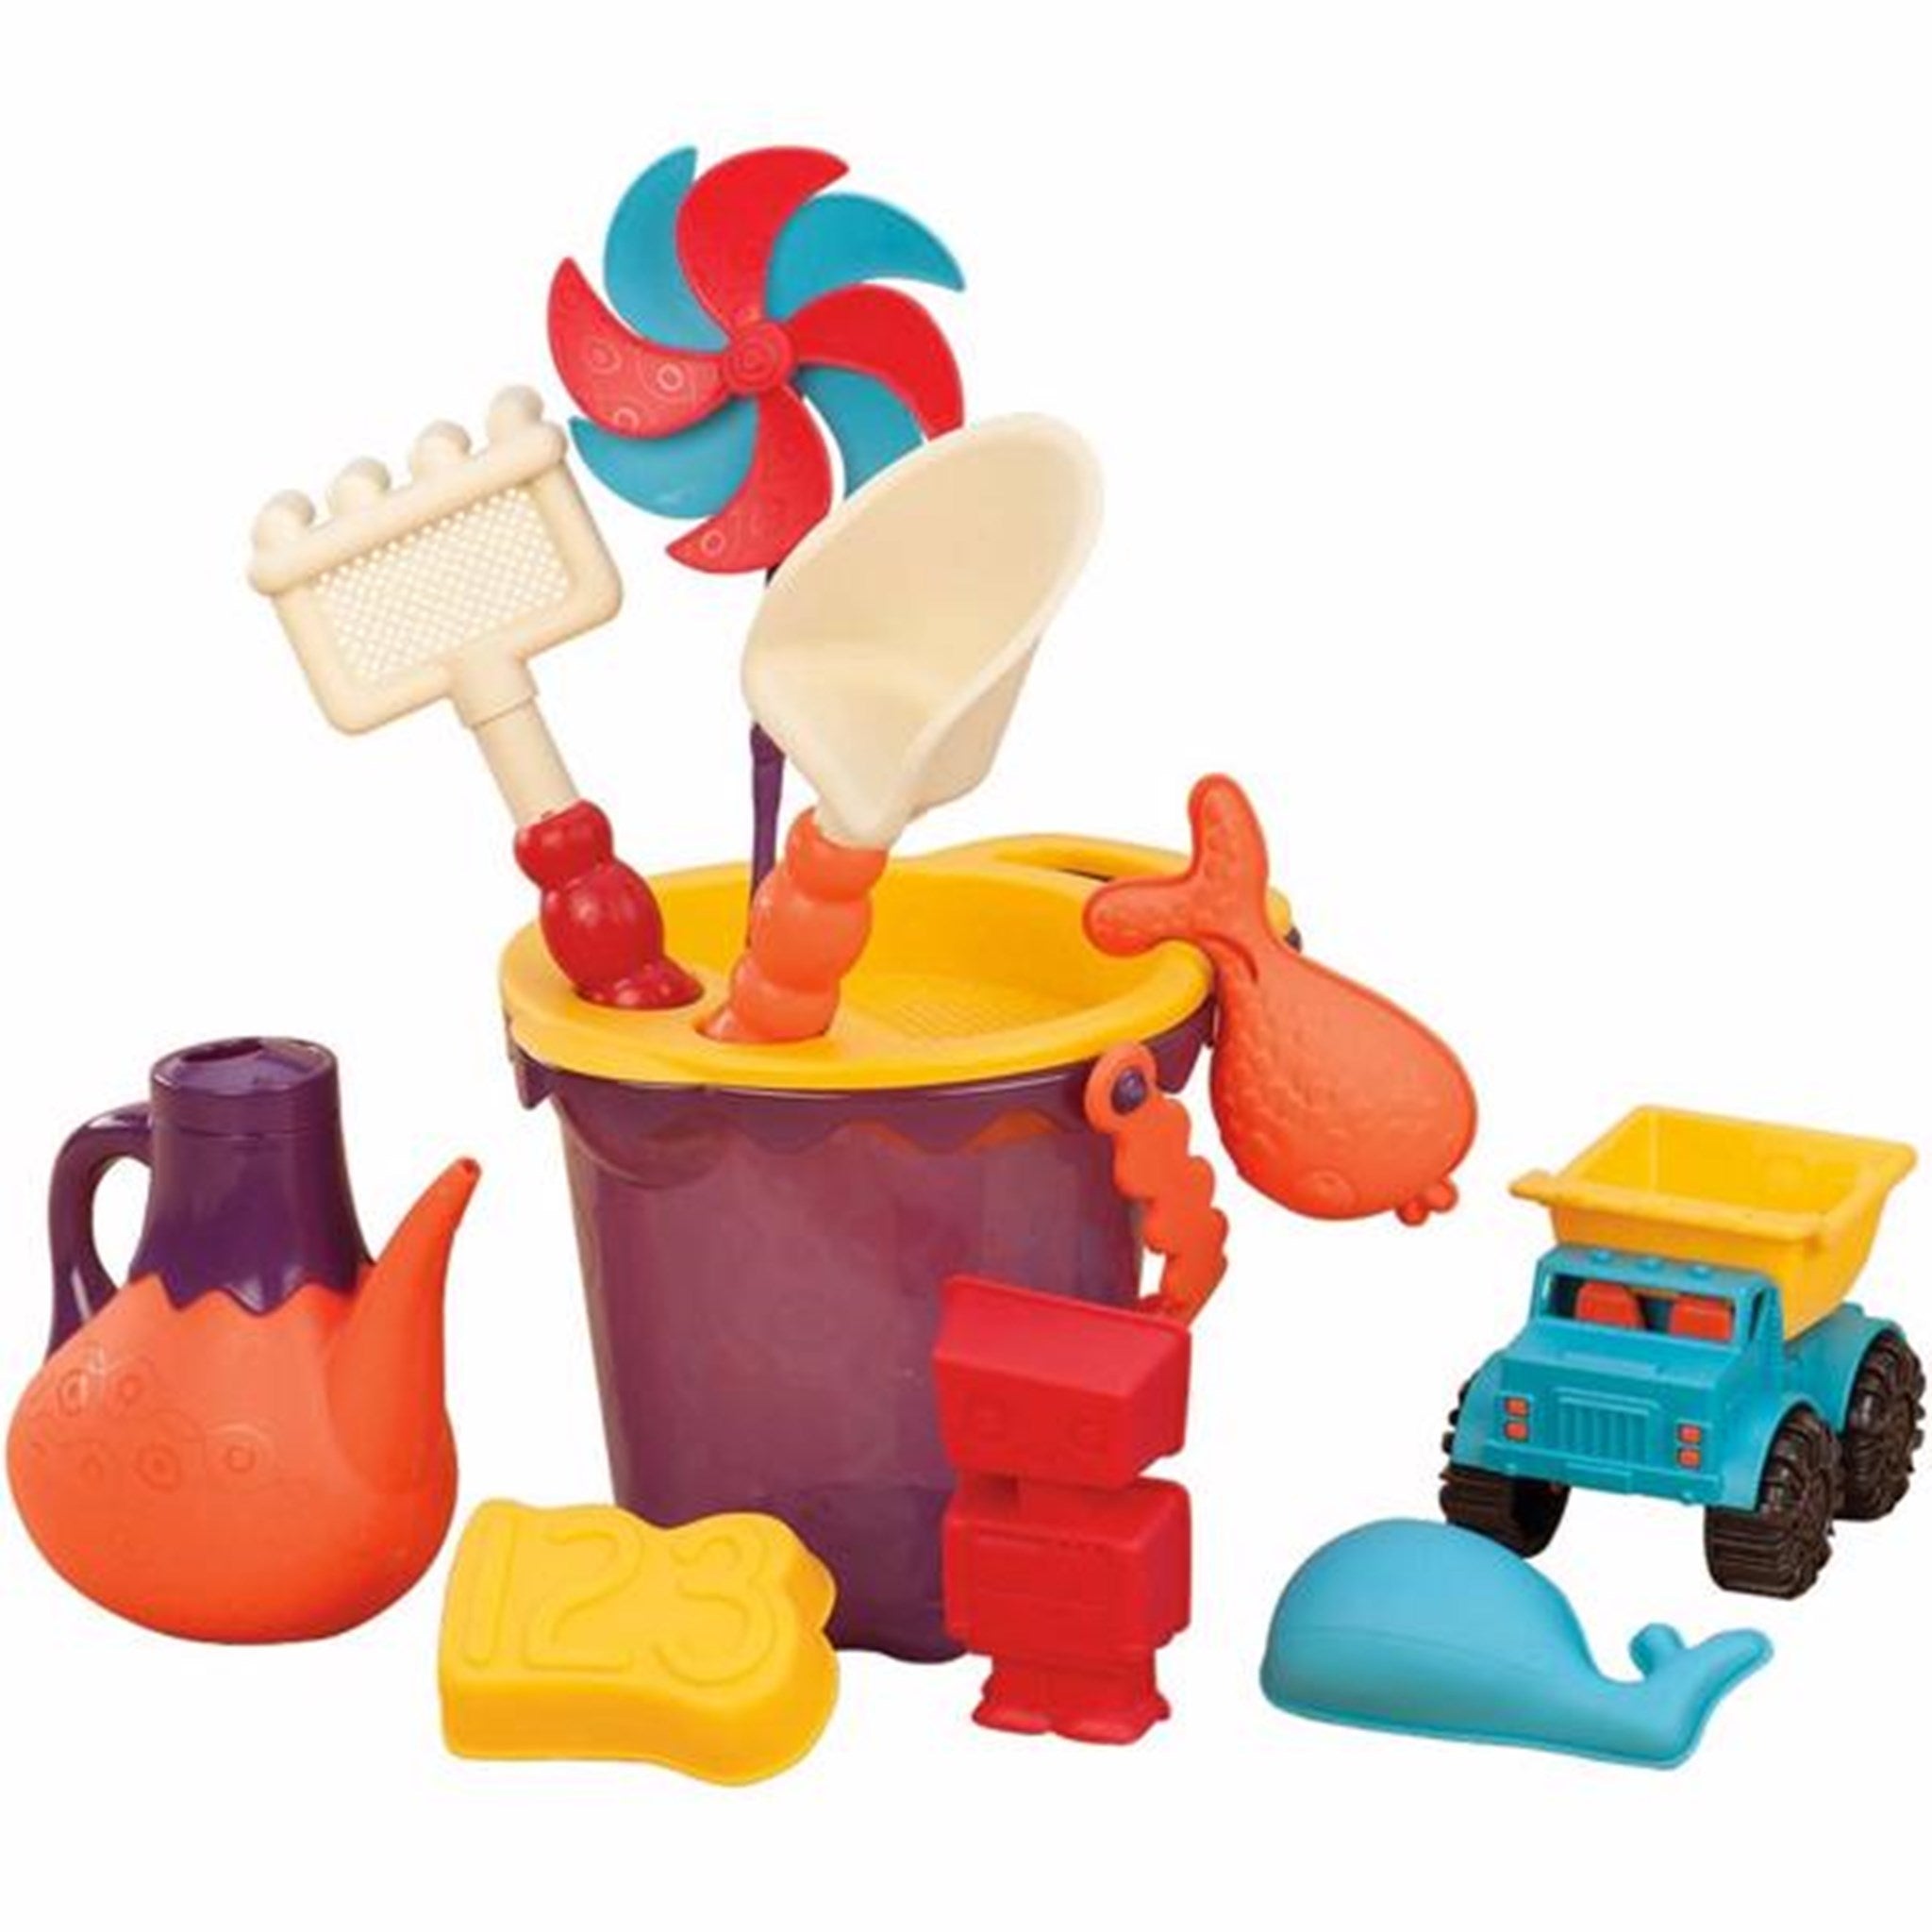 B-toys Ready Beach - Bucket set Purple